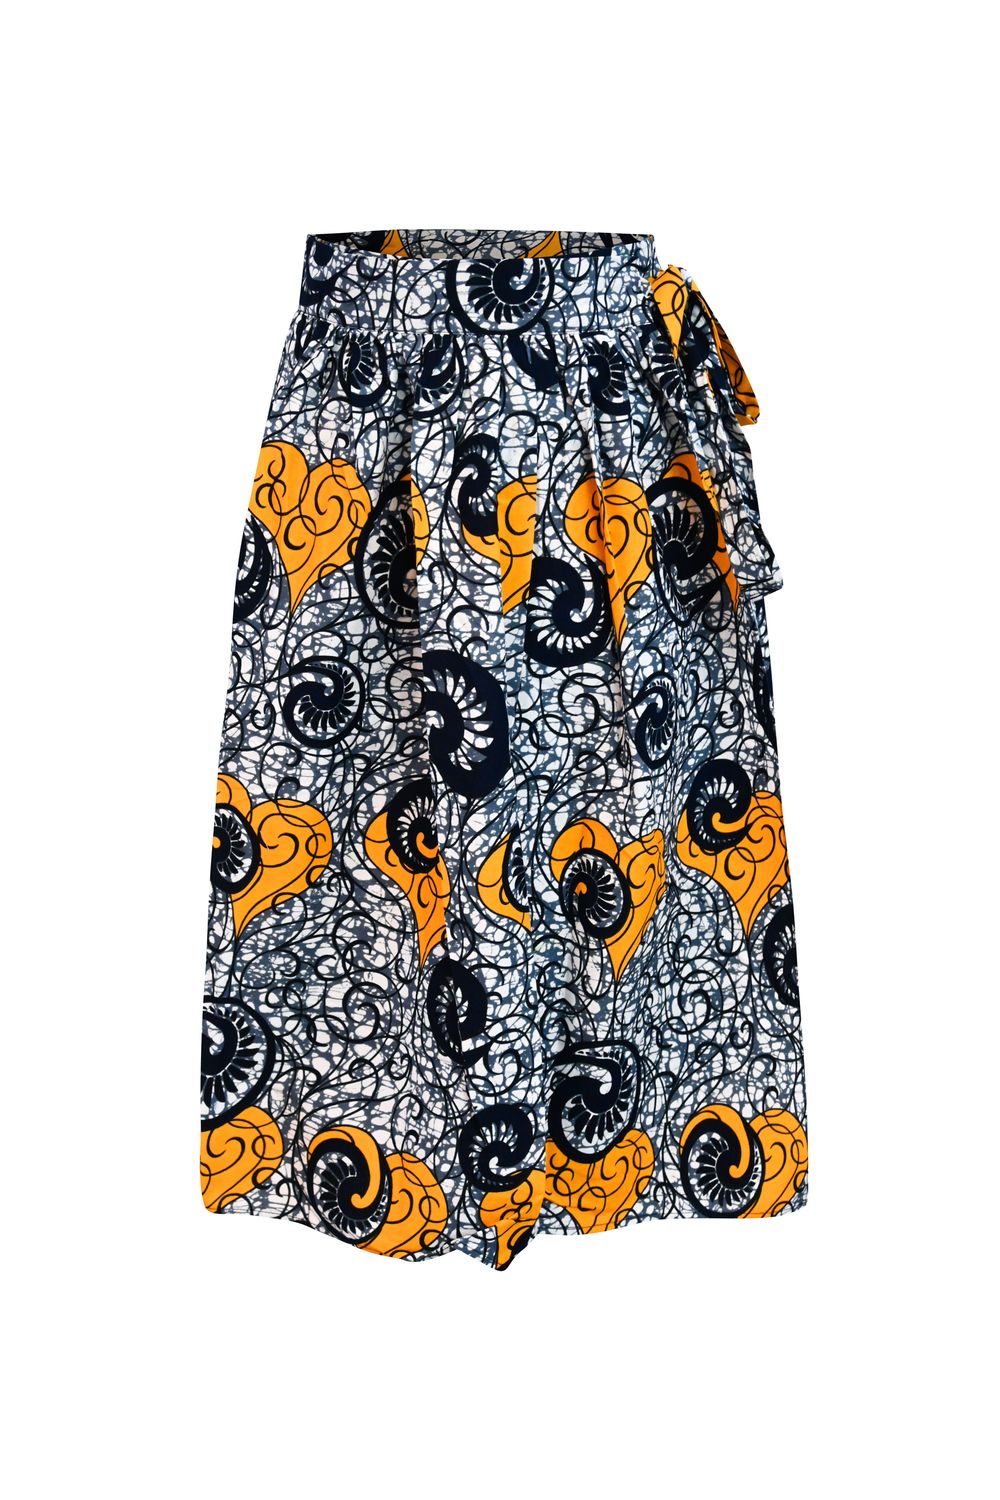 Imani Wrap Skirt -  Grey/Yellow Print |TROPICANA